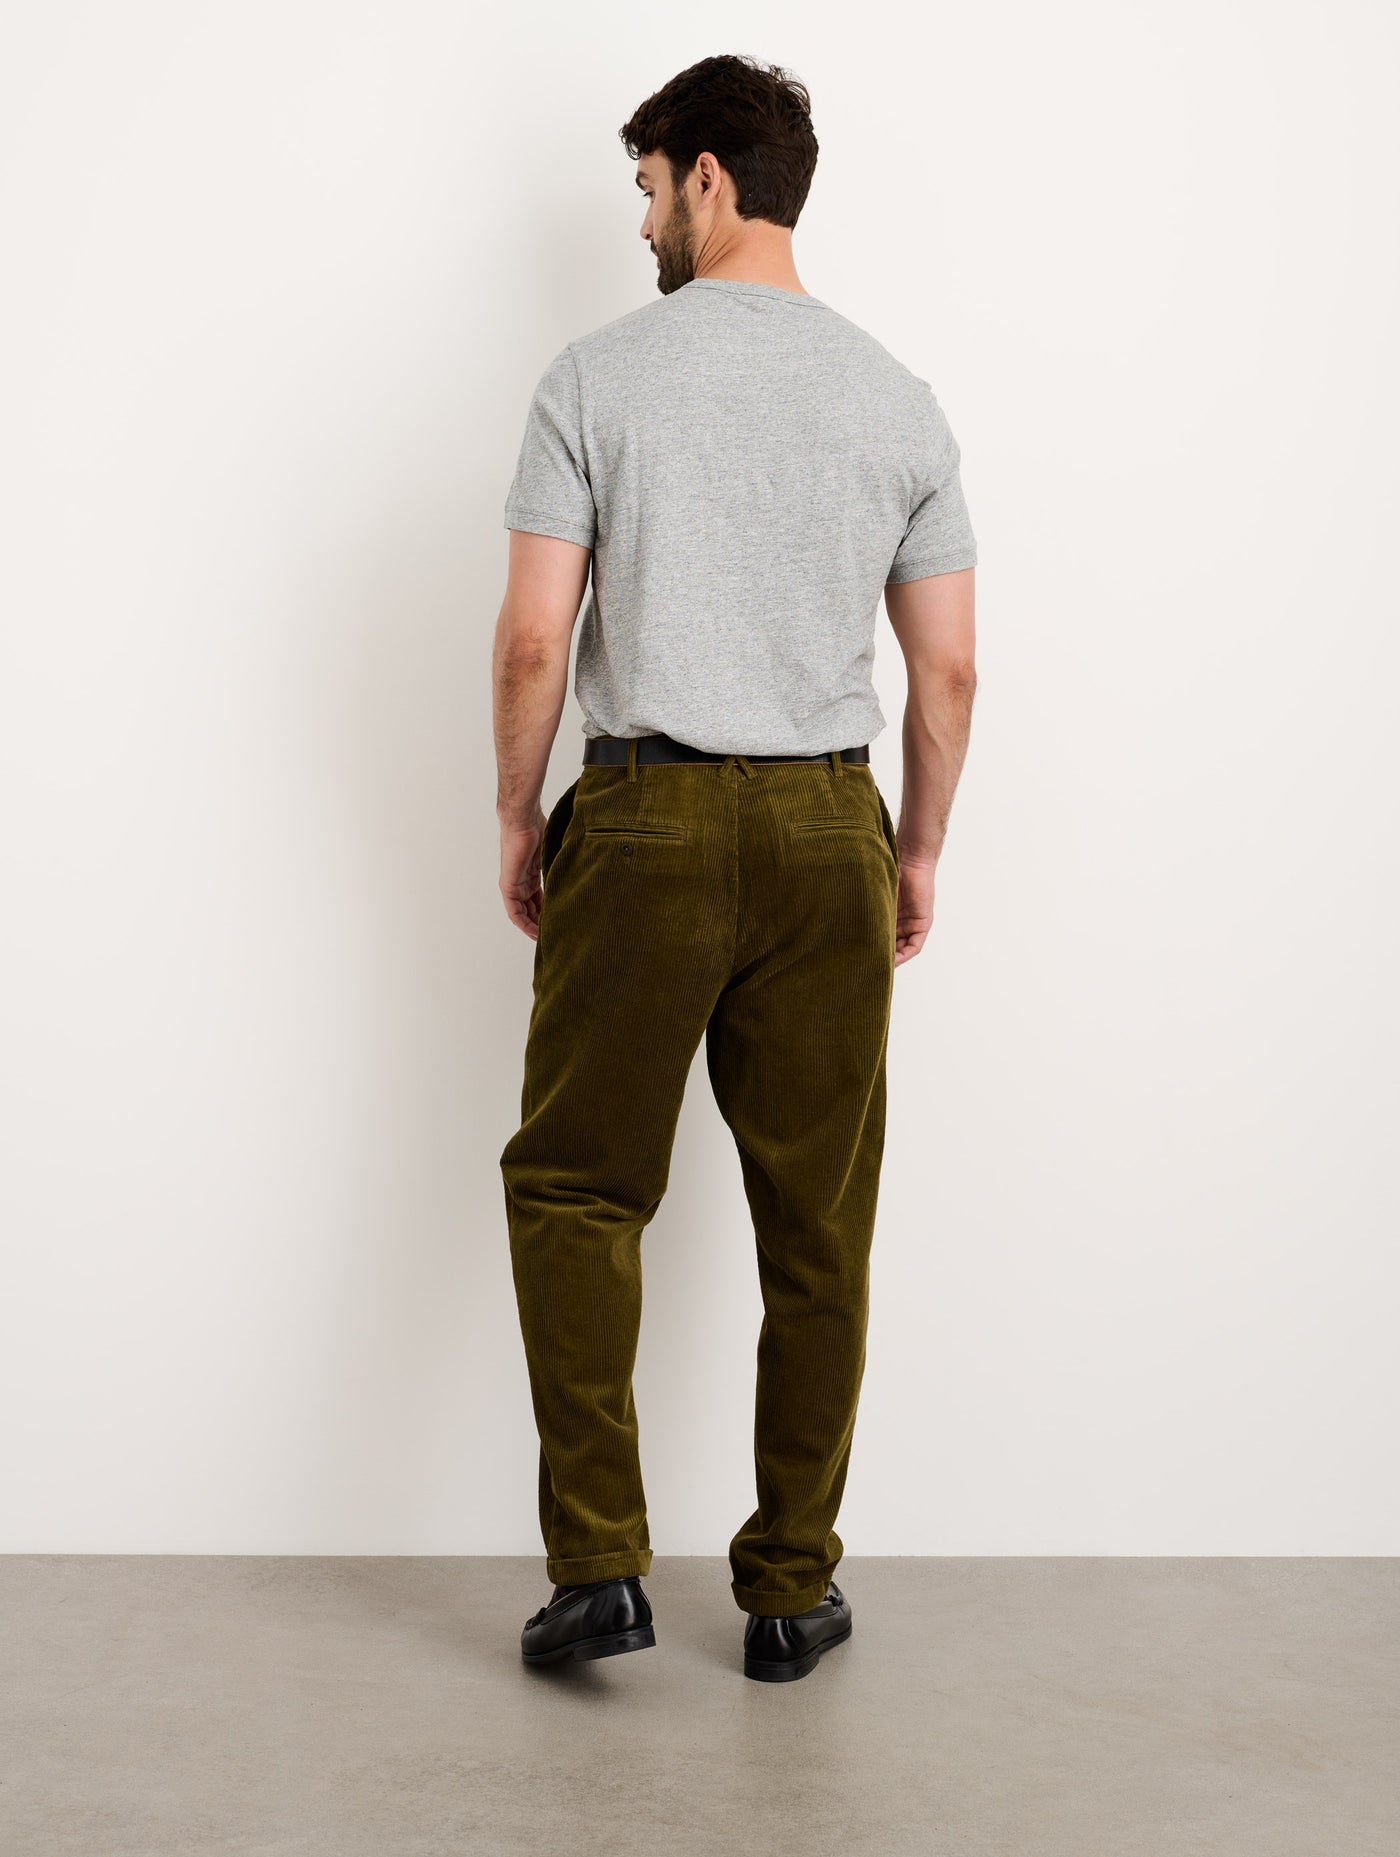 Standard Pleated Pant in Corduroy (Long Inseam)